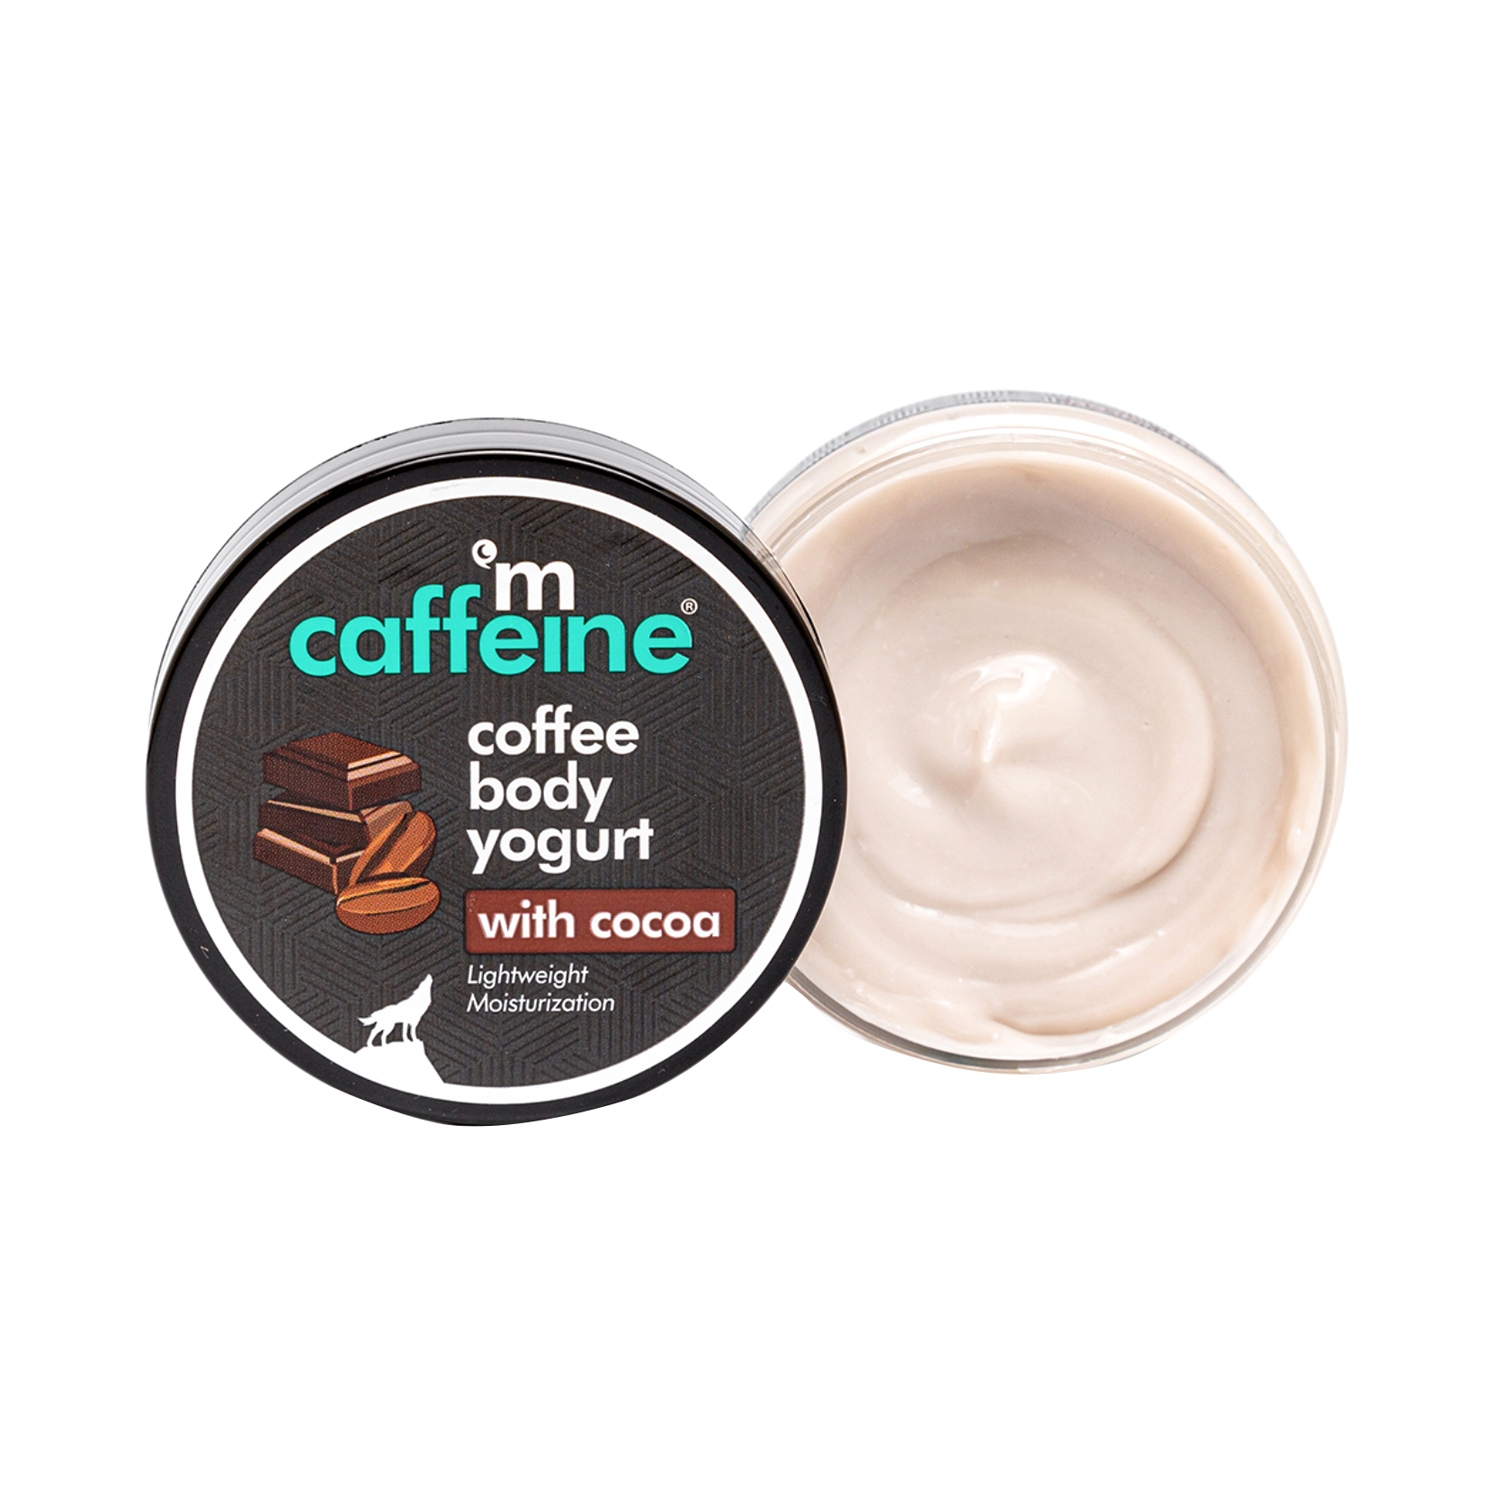 mCaffeine Coffee Body Yogurt With Cocoa (100g)